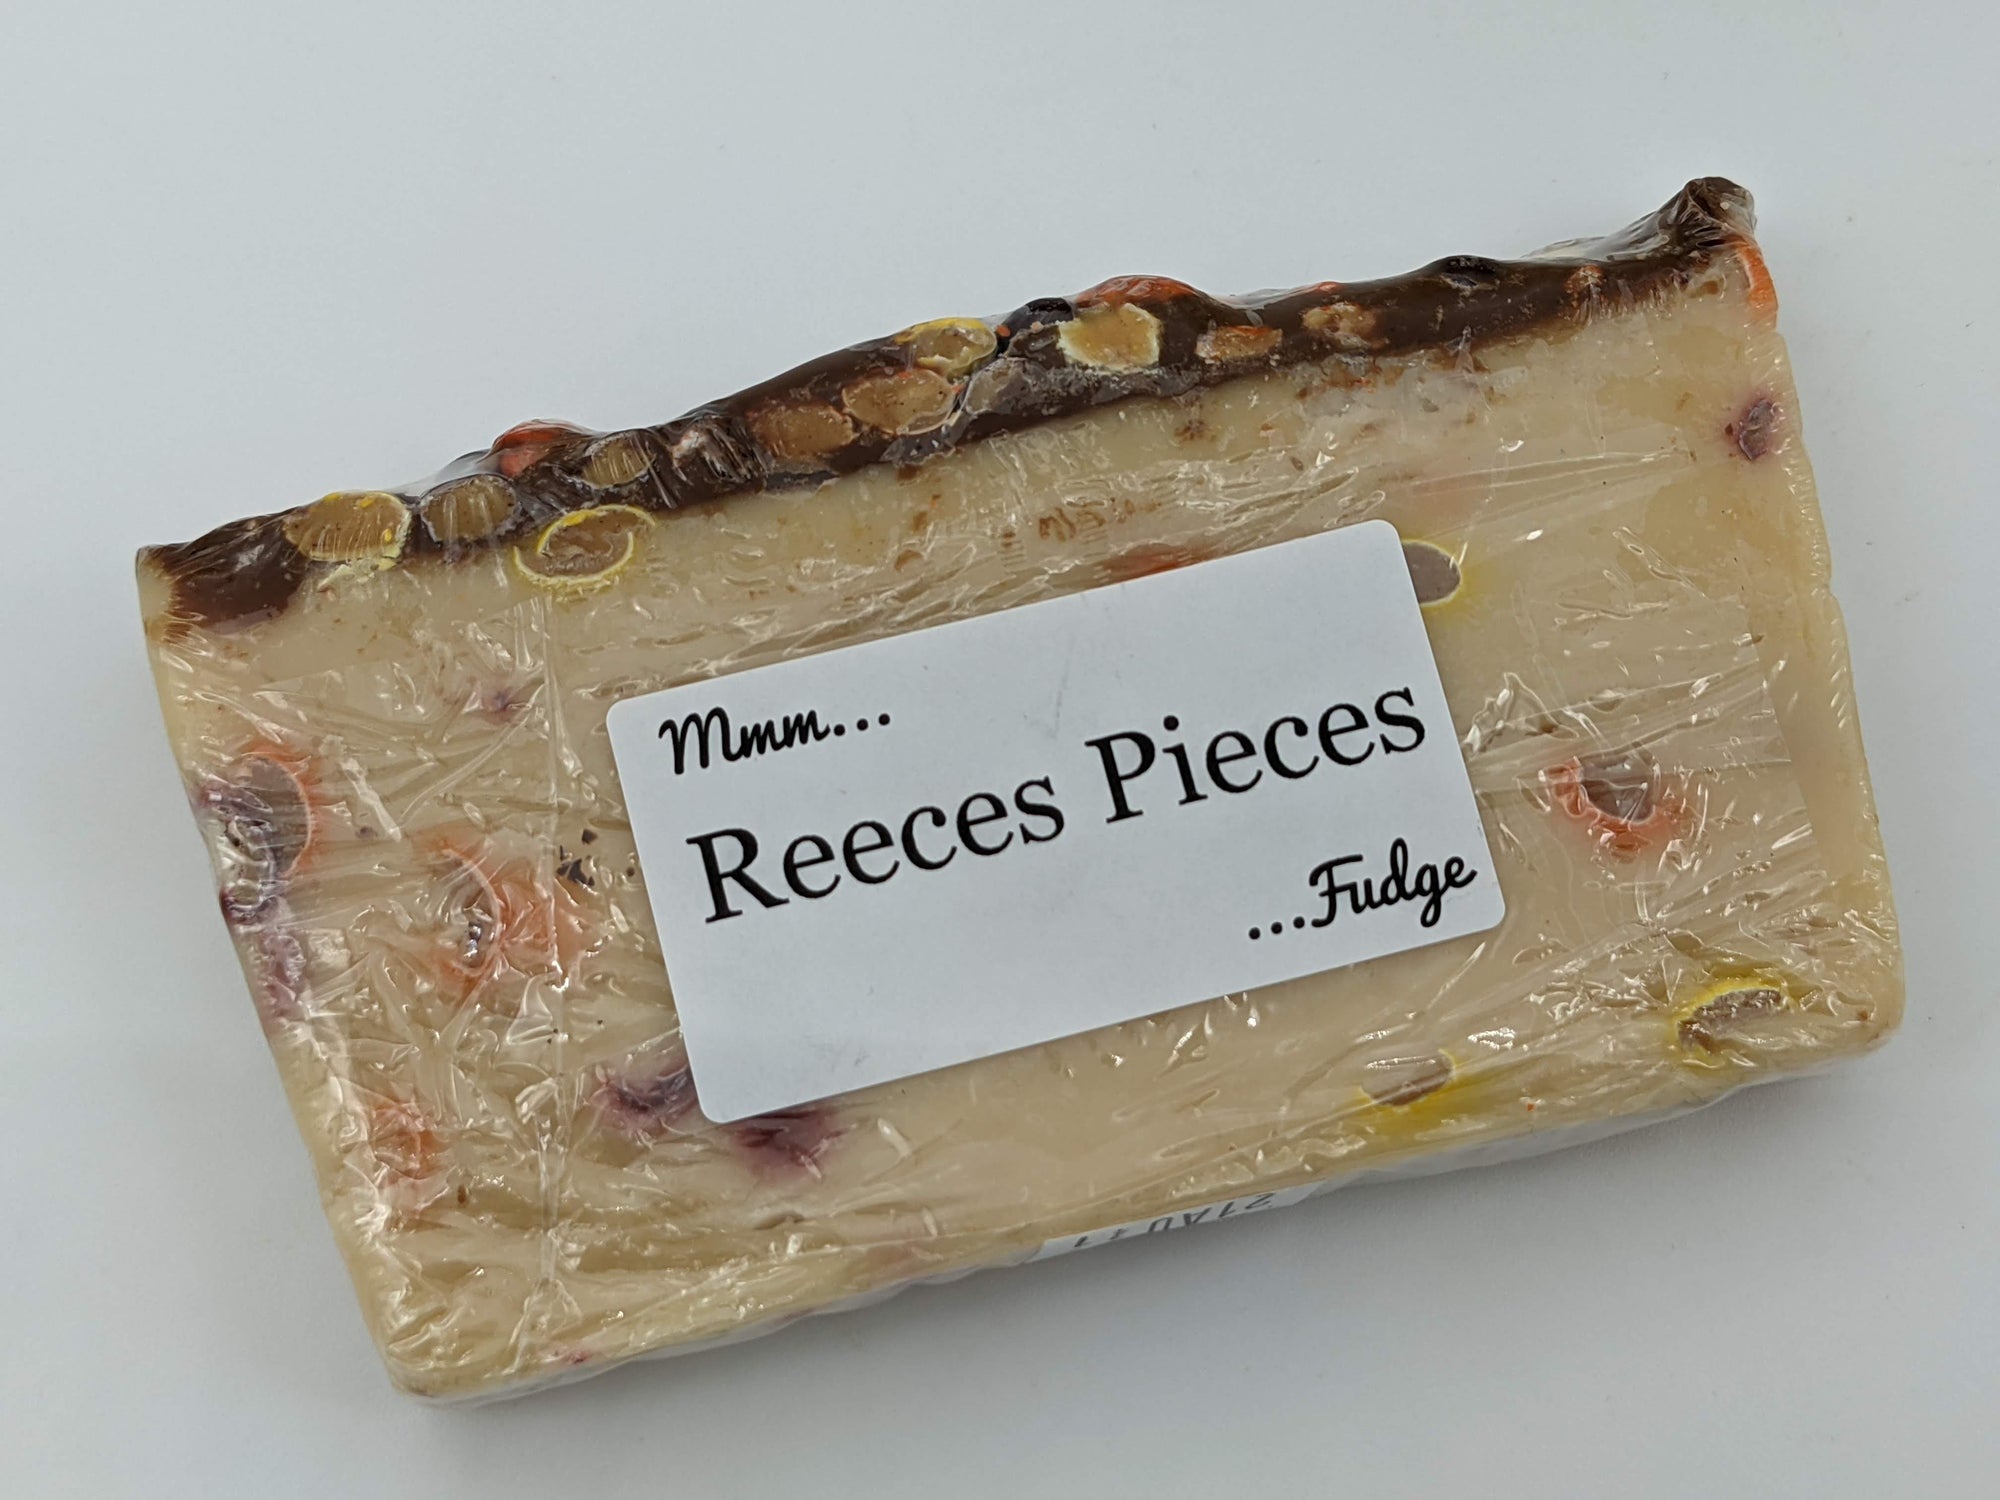 Fudge: Reece's Pieces